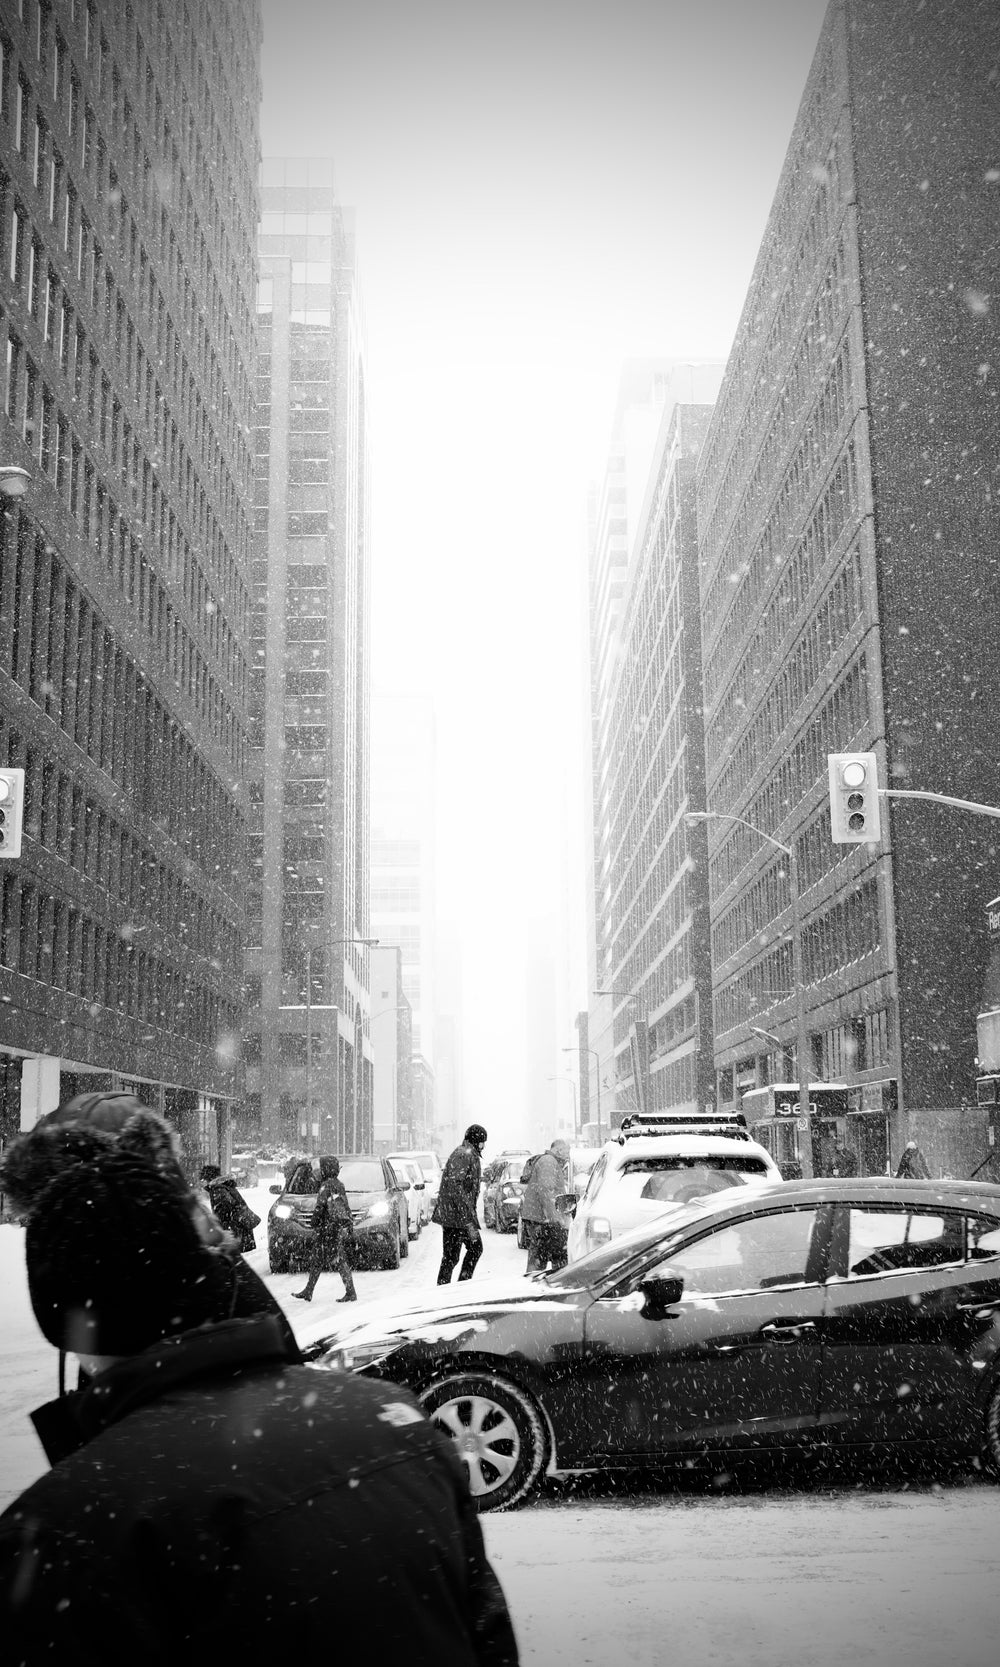 snowy winter city